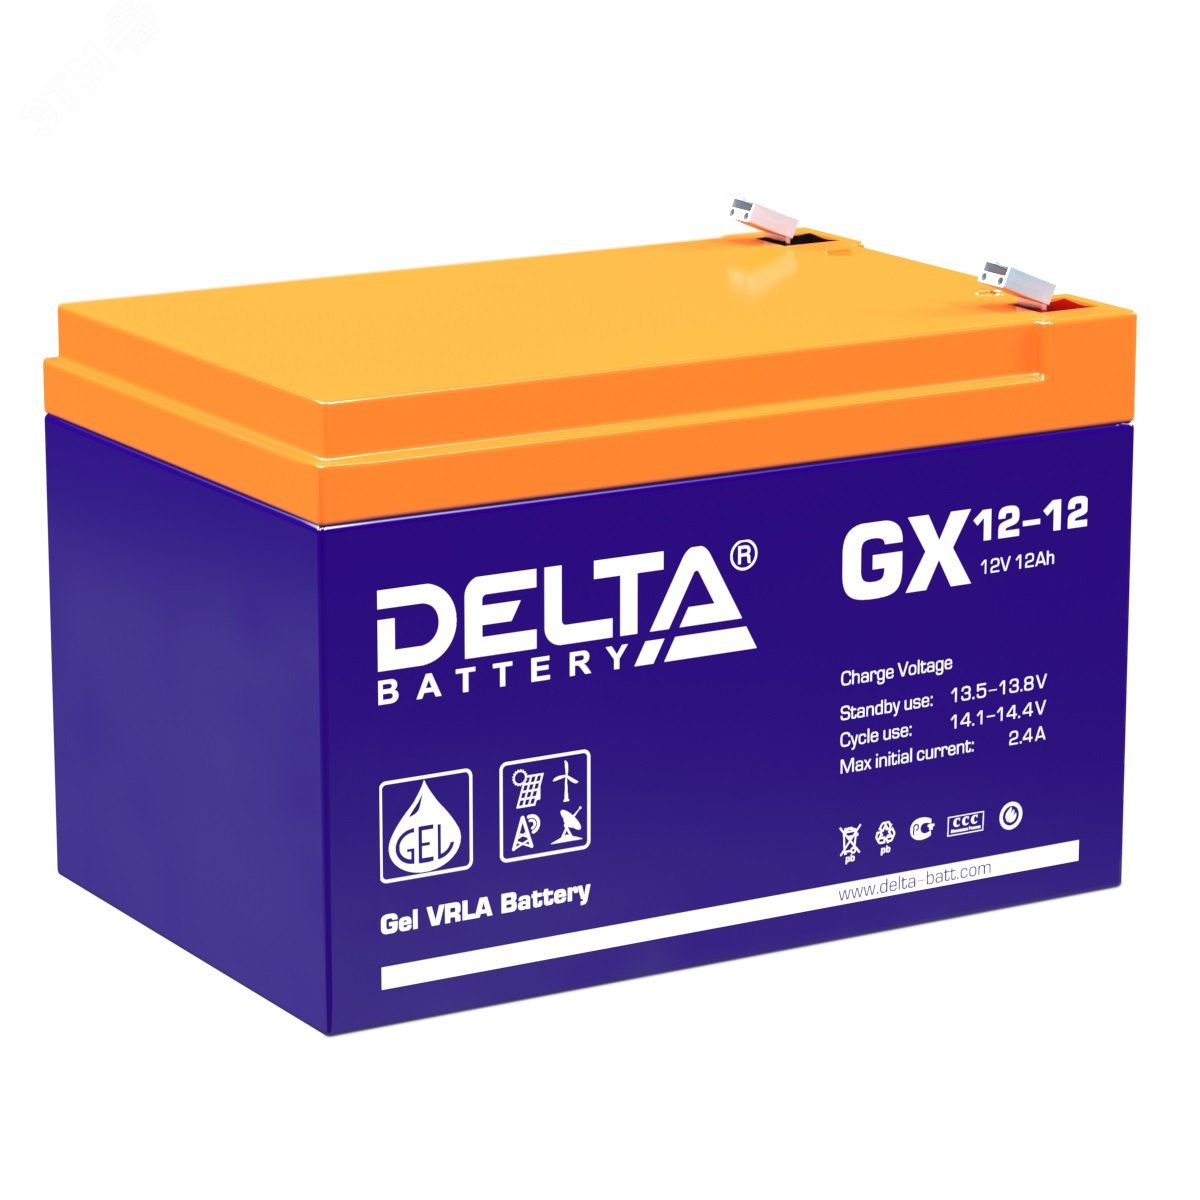 Аккумулятор GX 12В 12Ач GX 12-12 DELTA